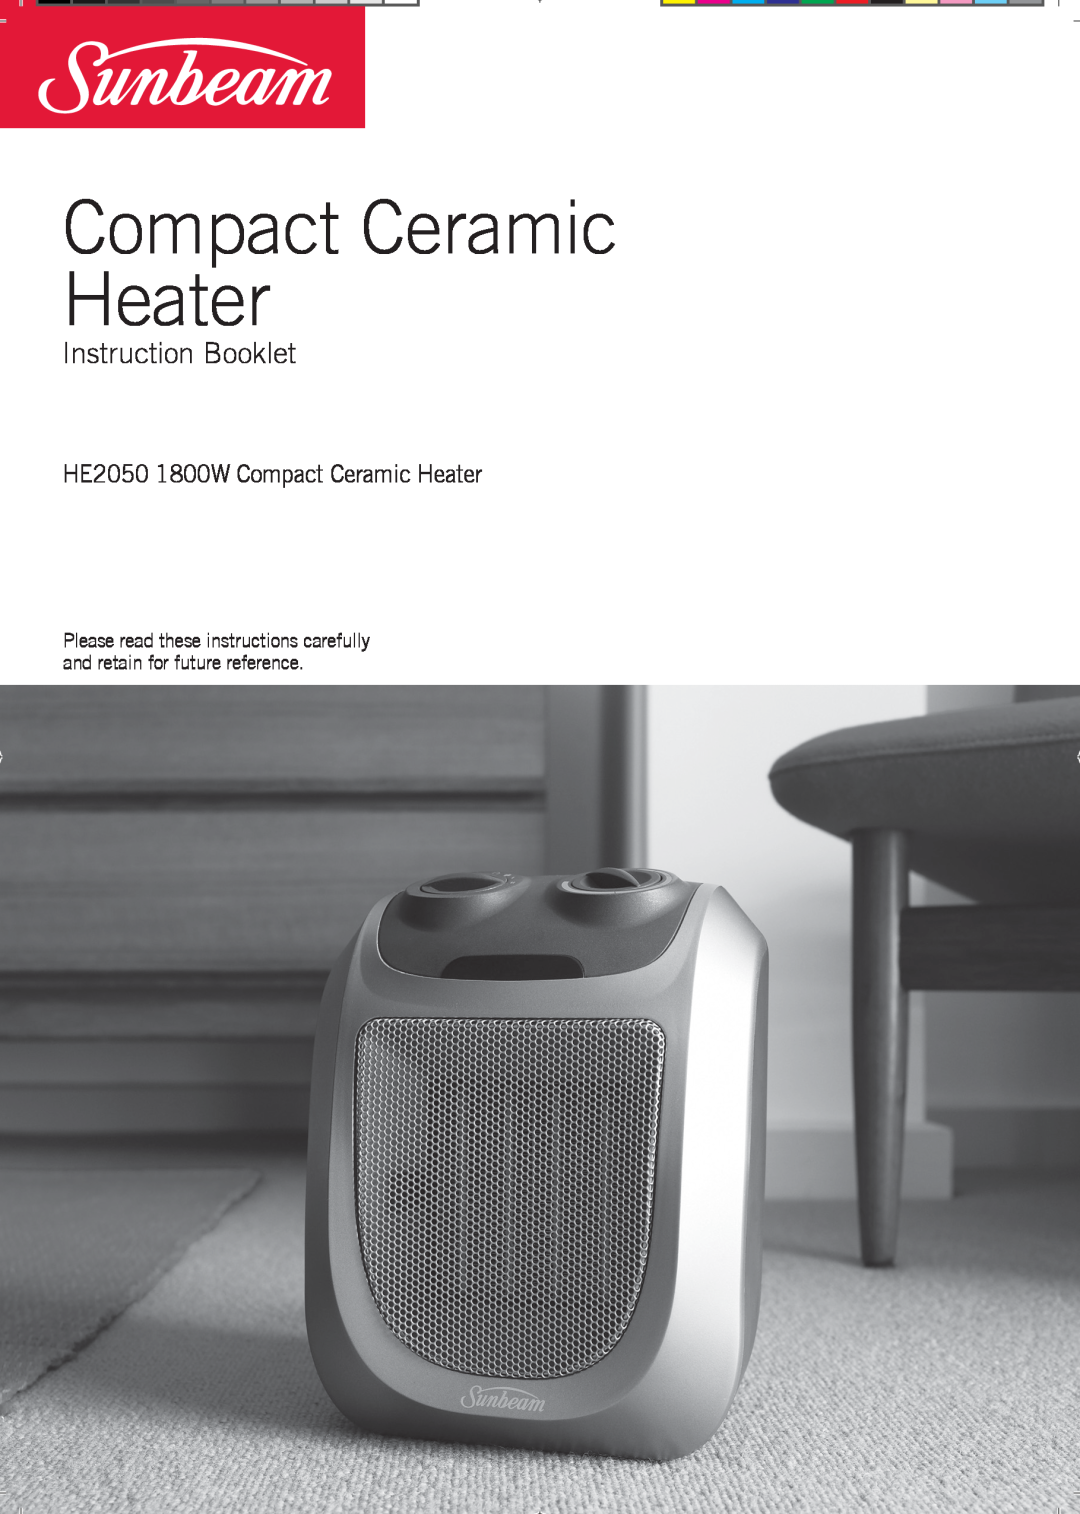 Sunbeam manual Instruction Booklet, HE2050 1800W Compact Ceramic Heater 